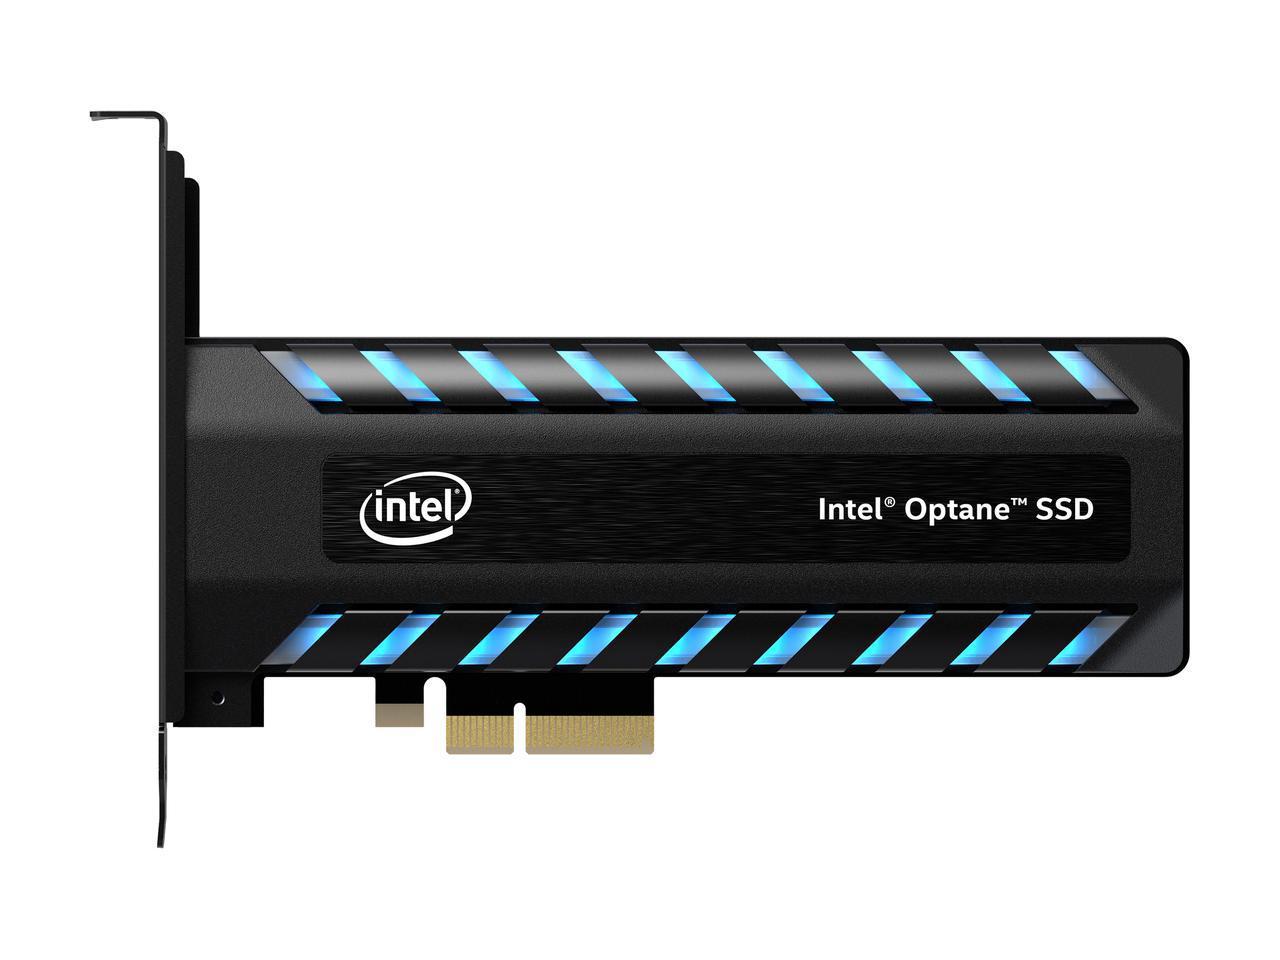 Intel Optane 905P review